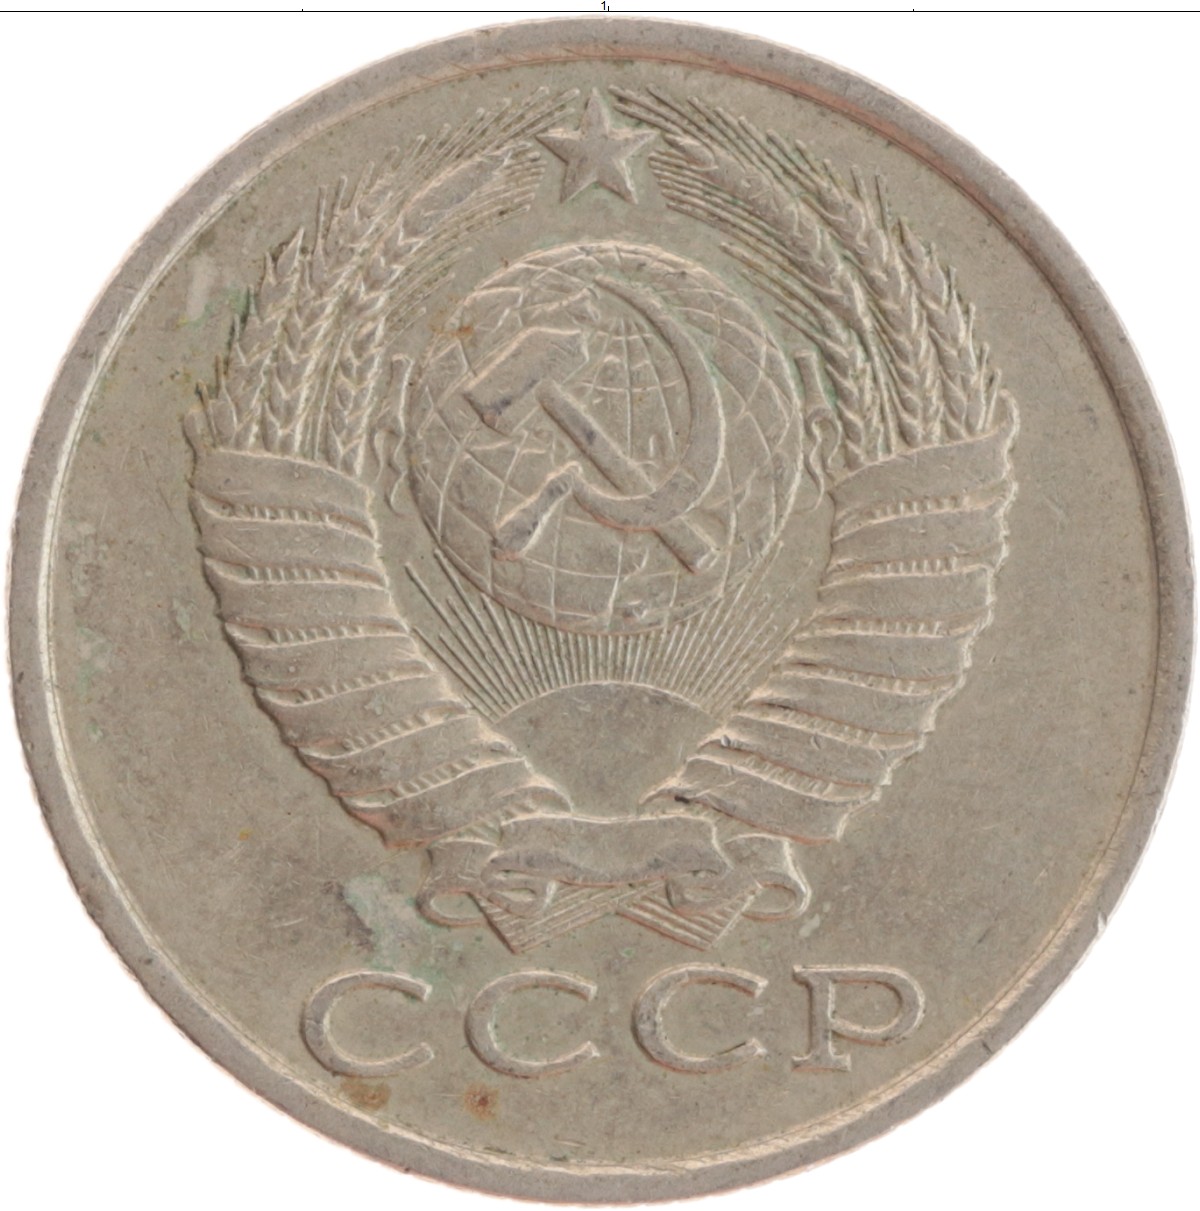 Монета 10 копеек 1961 года. 15 Копеек 1961 медная. 15 Копеек 1978. Монета 10 коп 1961. Монеты 15 копеек СССР 1961.